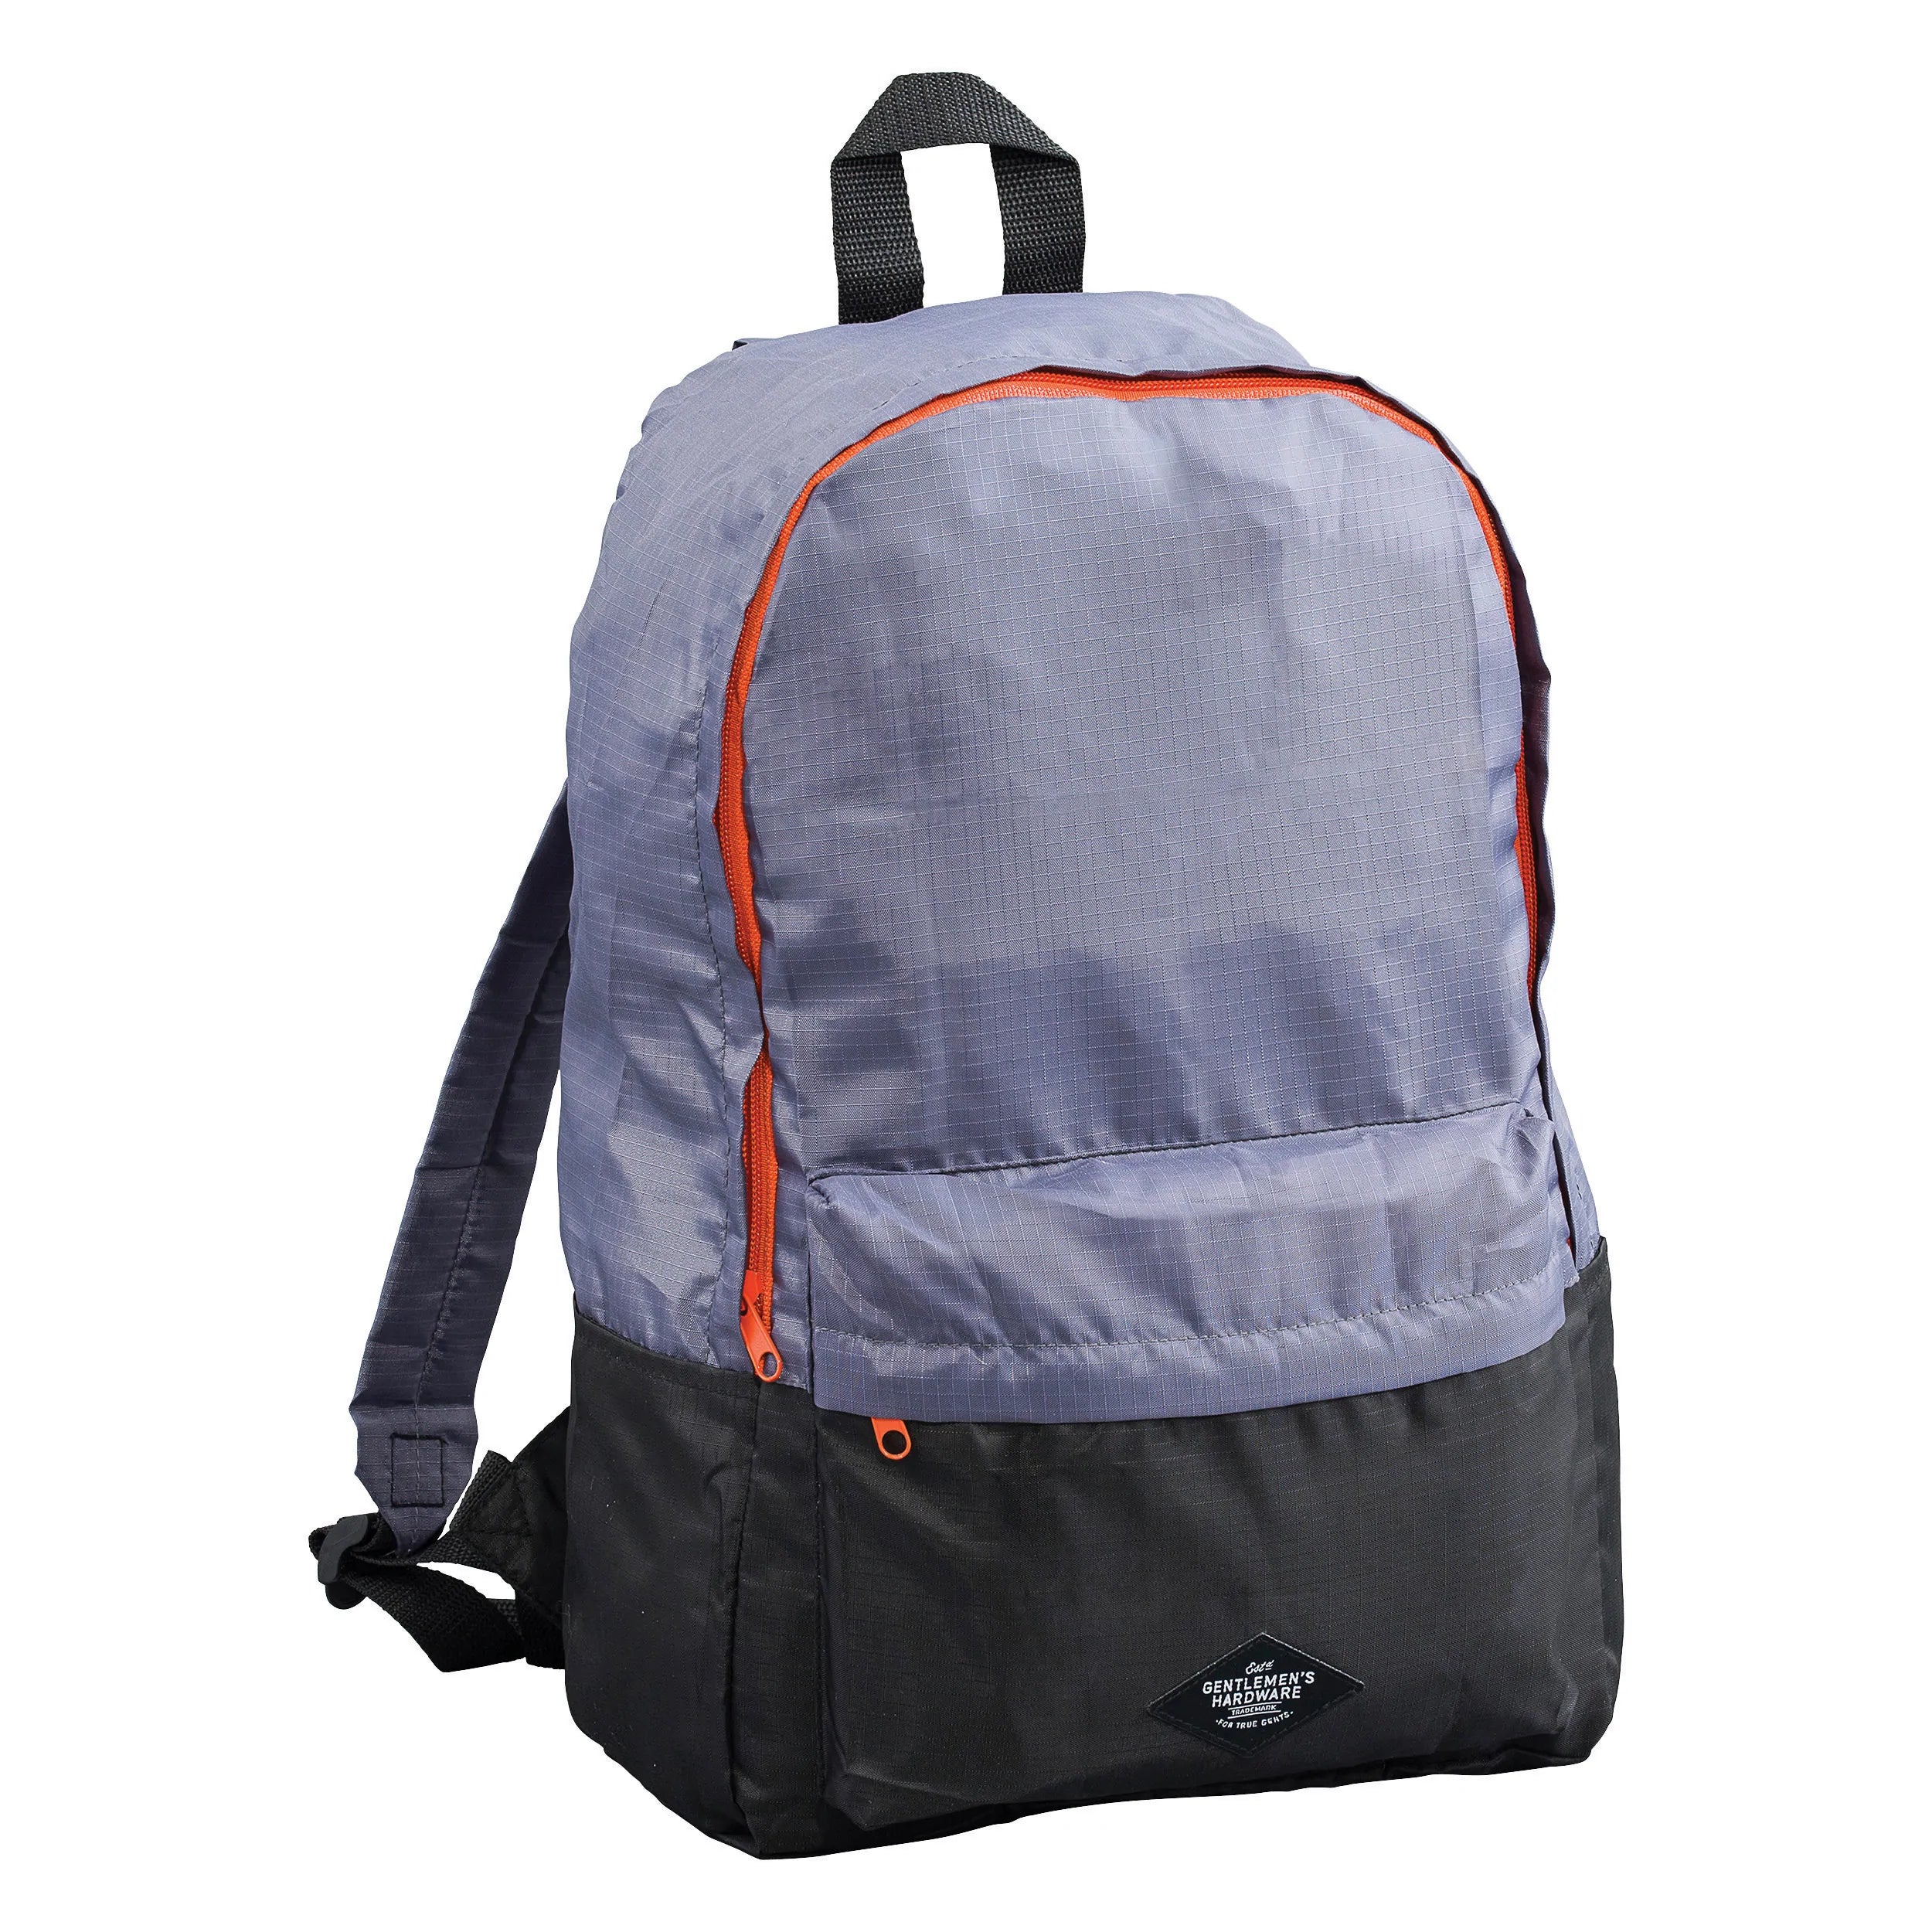 Gentleman's Hardware Foldaway Backpack